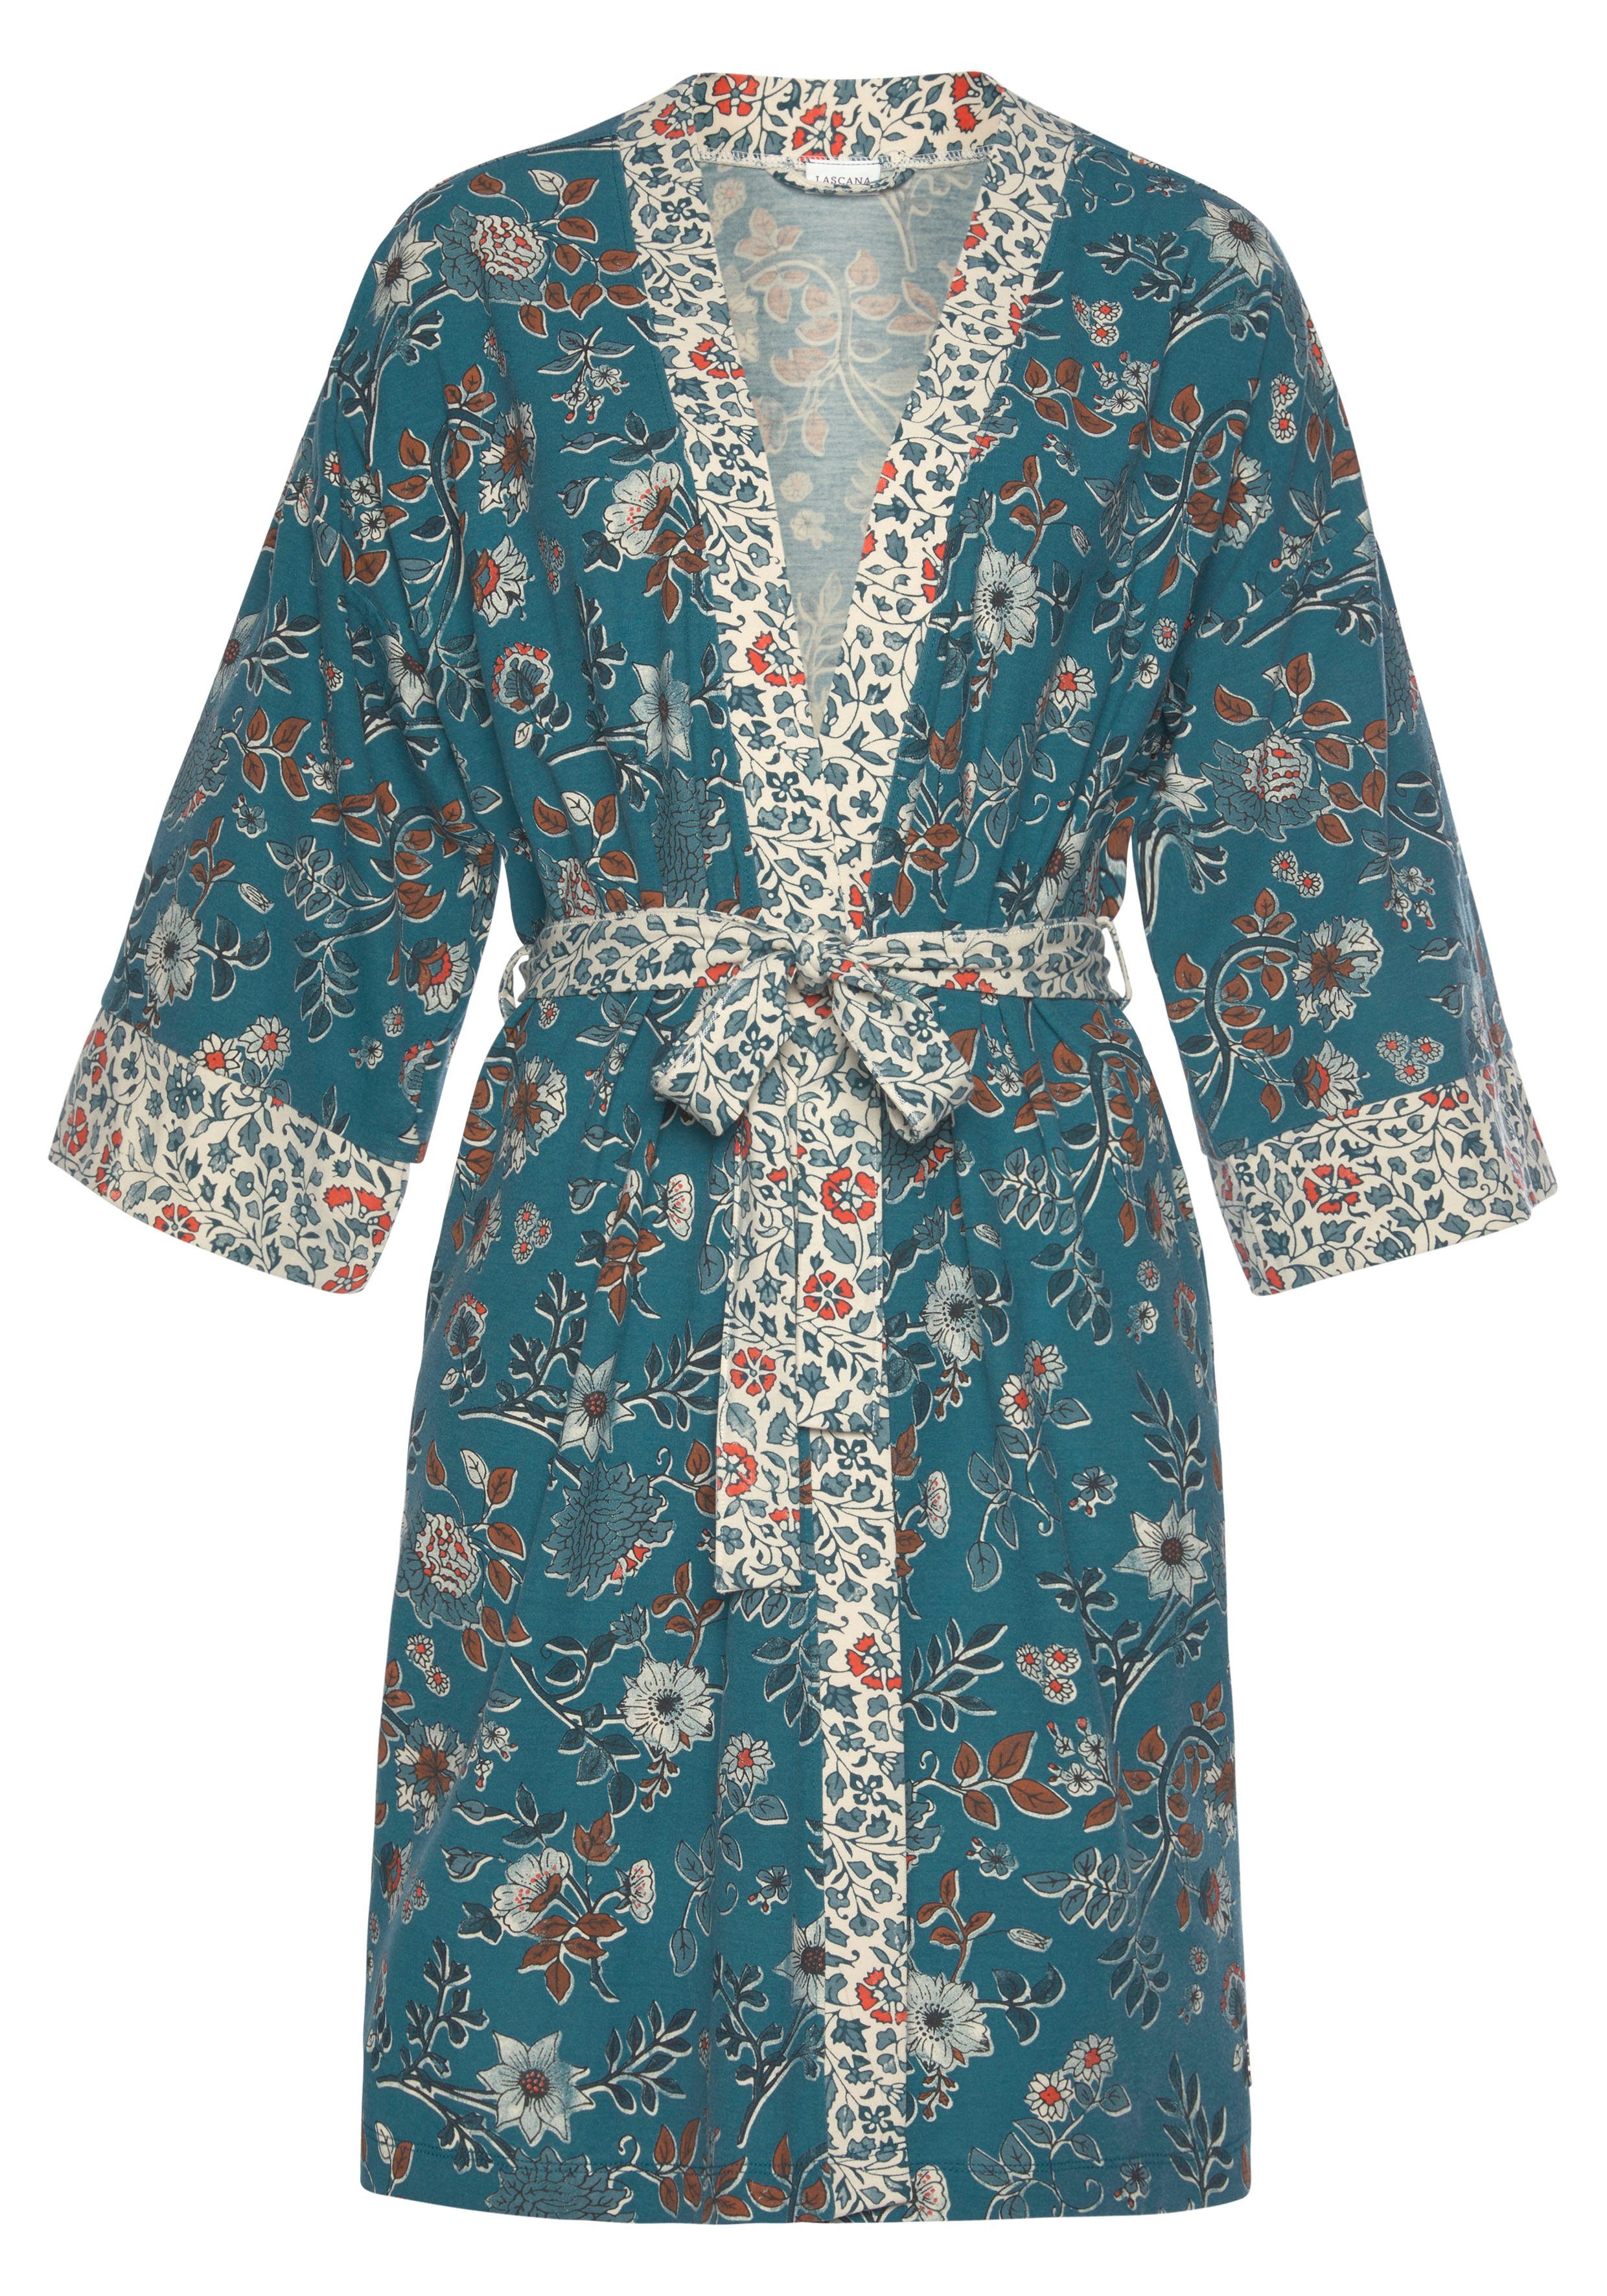 LASCANA Kimono, Kurzform, Jersey, rauchblau-ecru Allover-Druck mit Kimono-Kragen, Gürtel, Blumen